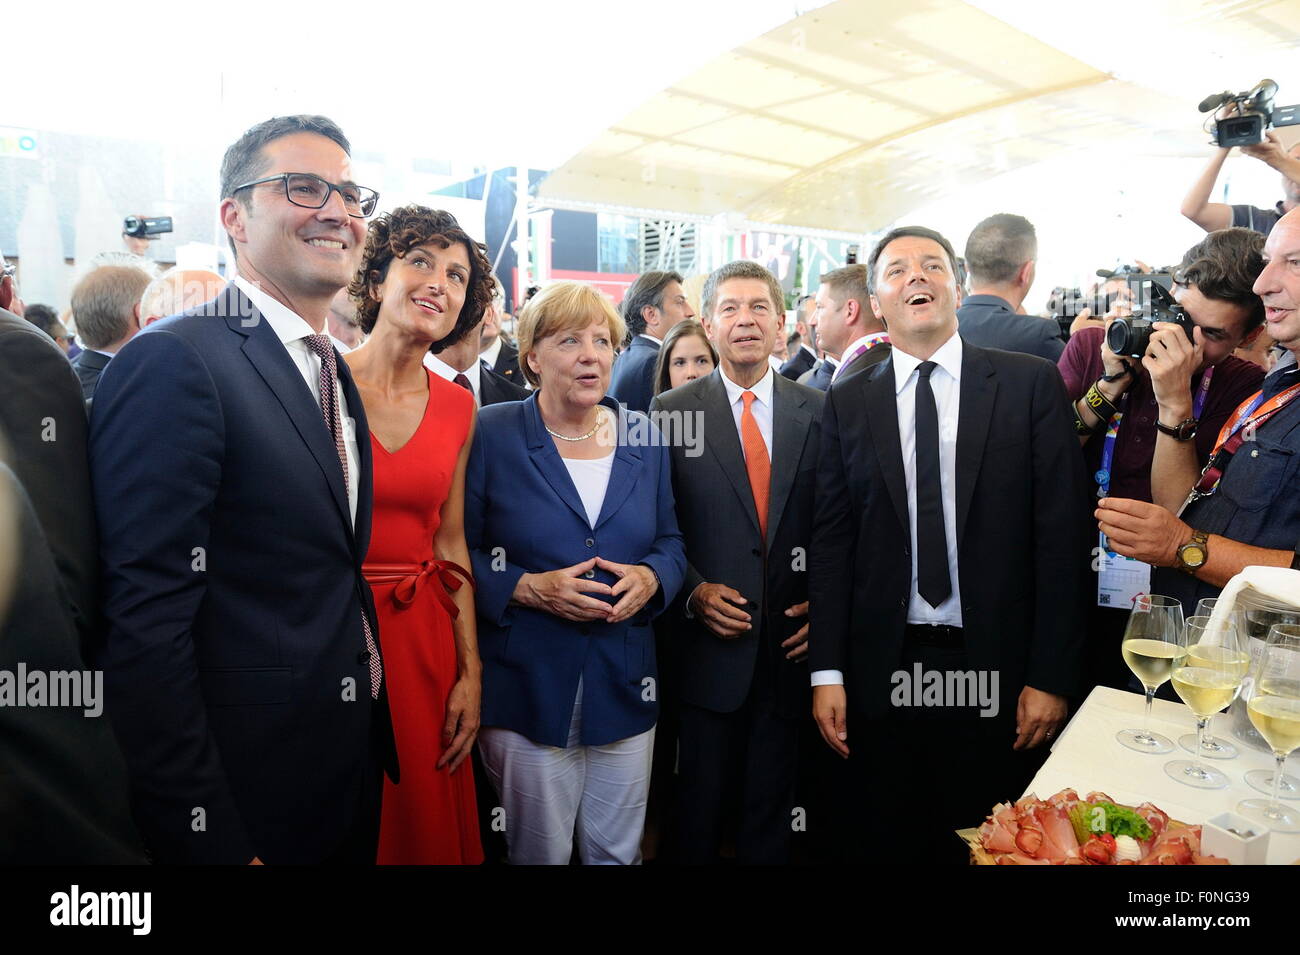 Bundeskanzlerin Angela Merkel mit Ehemann Joachim Sauer, der Premierminister Matteo Renzi und Frau Agnese Landini. Expo 2015. Mailand. Italien. 17.08.2015 Stockfoto